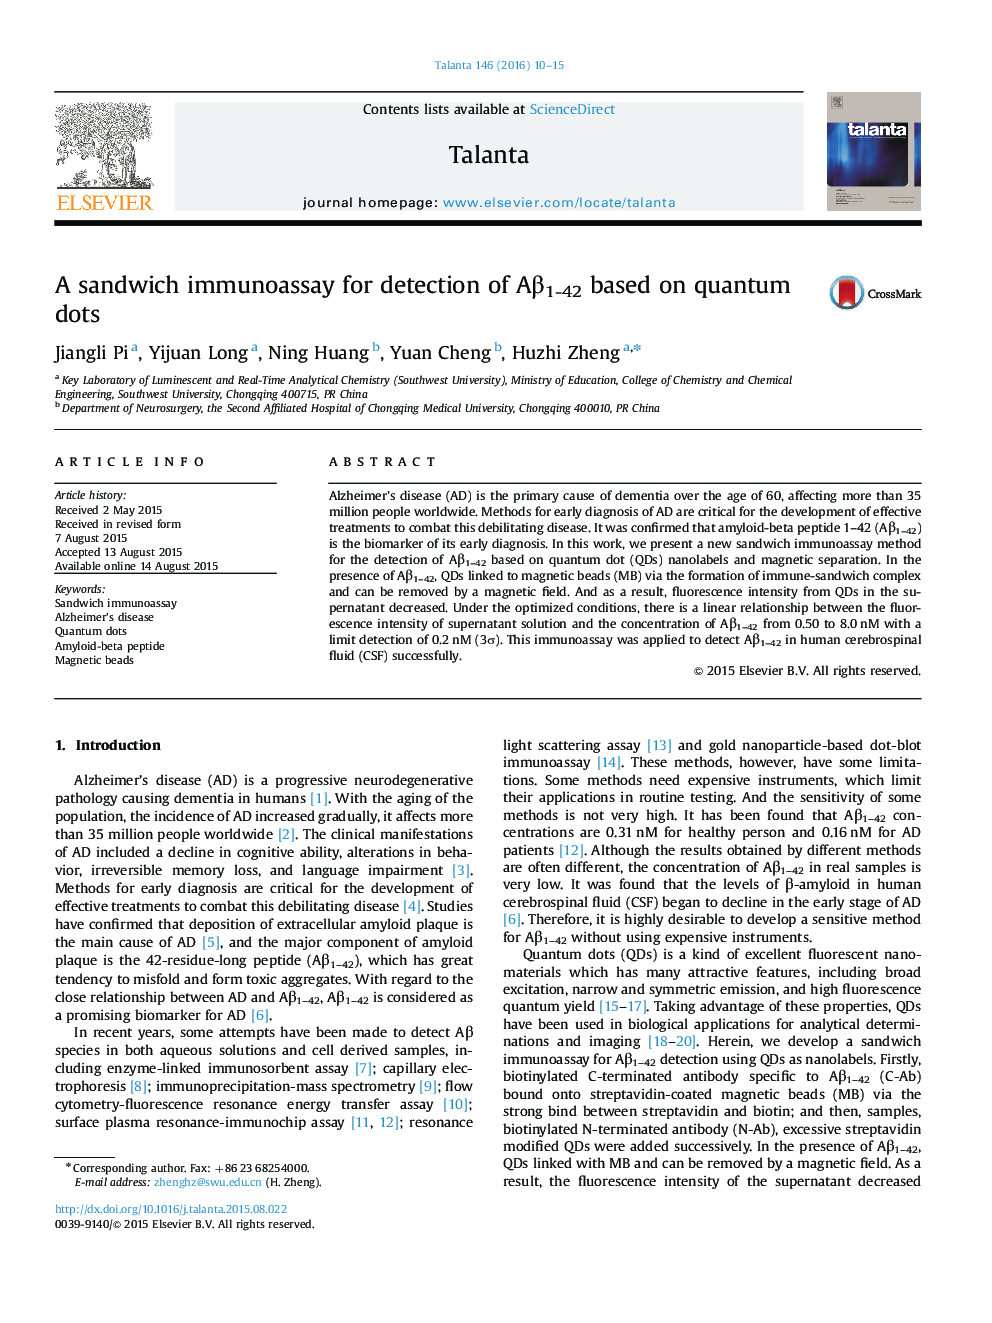 A sandwich immunoassay for detection of AÎ²1-42 based on quantum dots